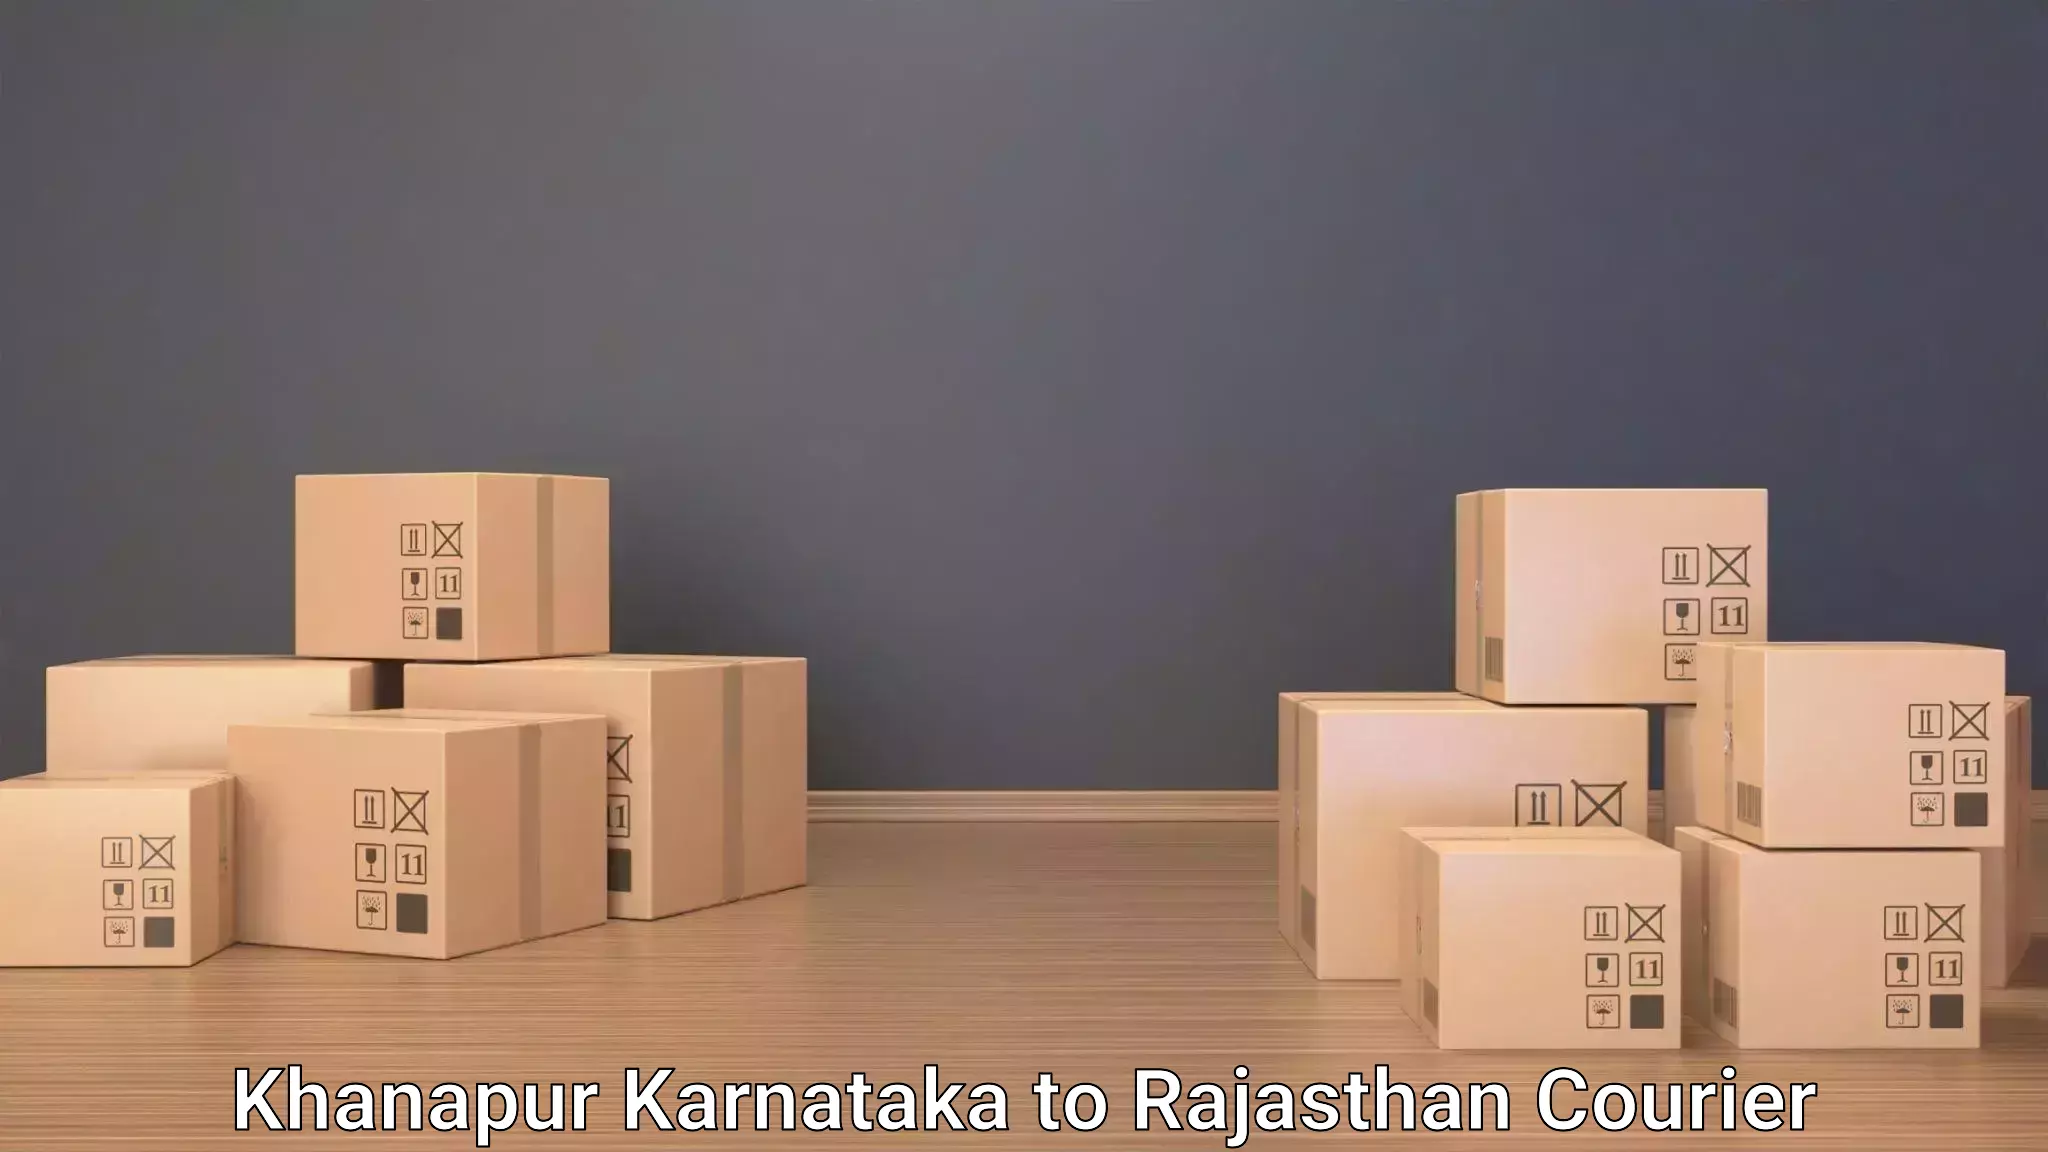 Baggage transport innovation Khanapur Karnataka to Mahwa